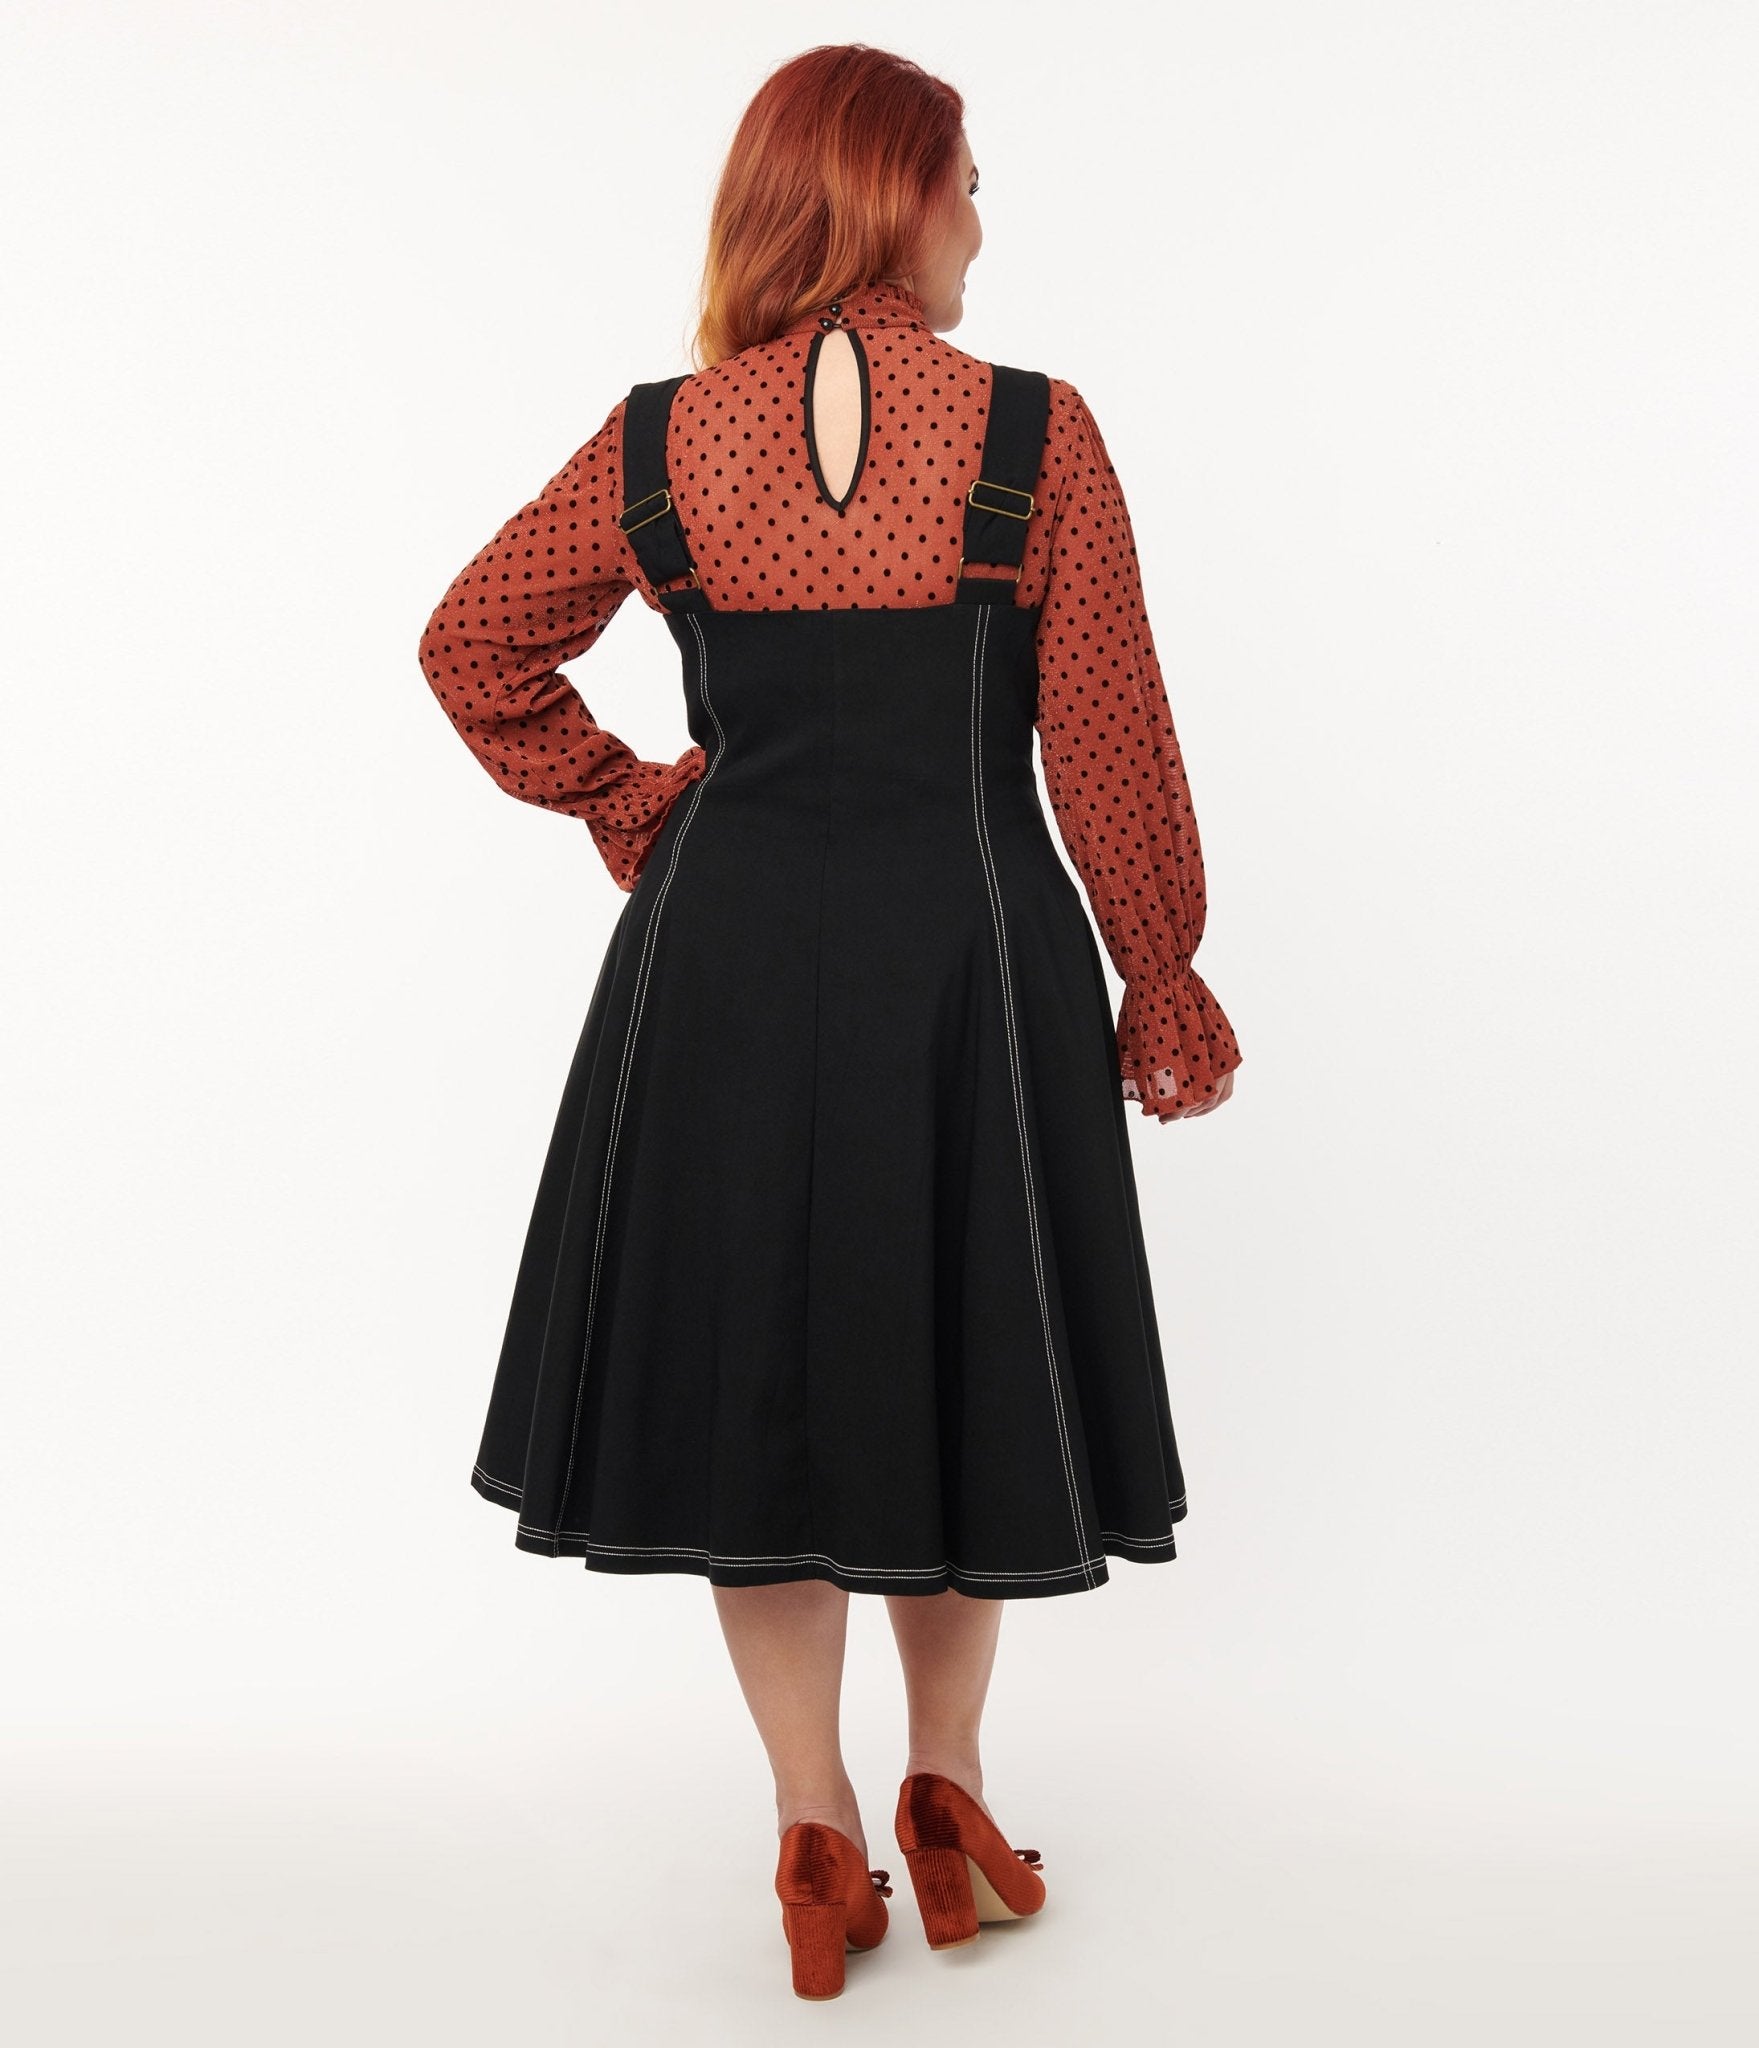 Unique Bargains Women's Button Decor Overall Dress Fit and Flare Midi  Suspender Skirt M Black